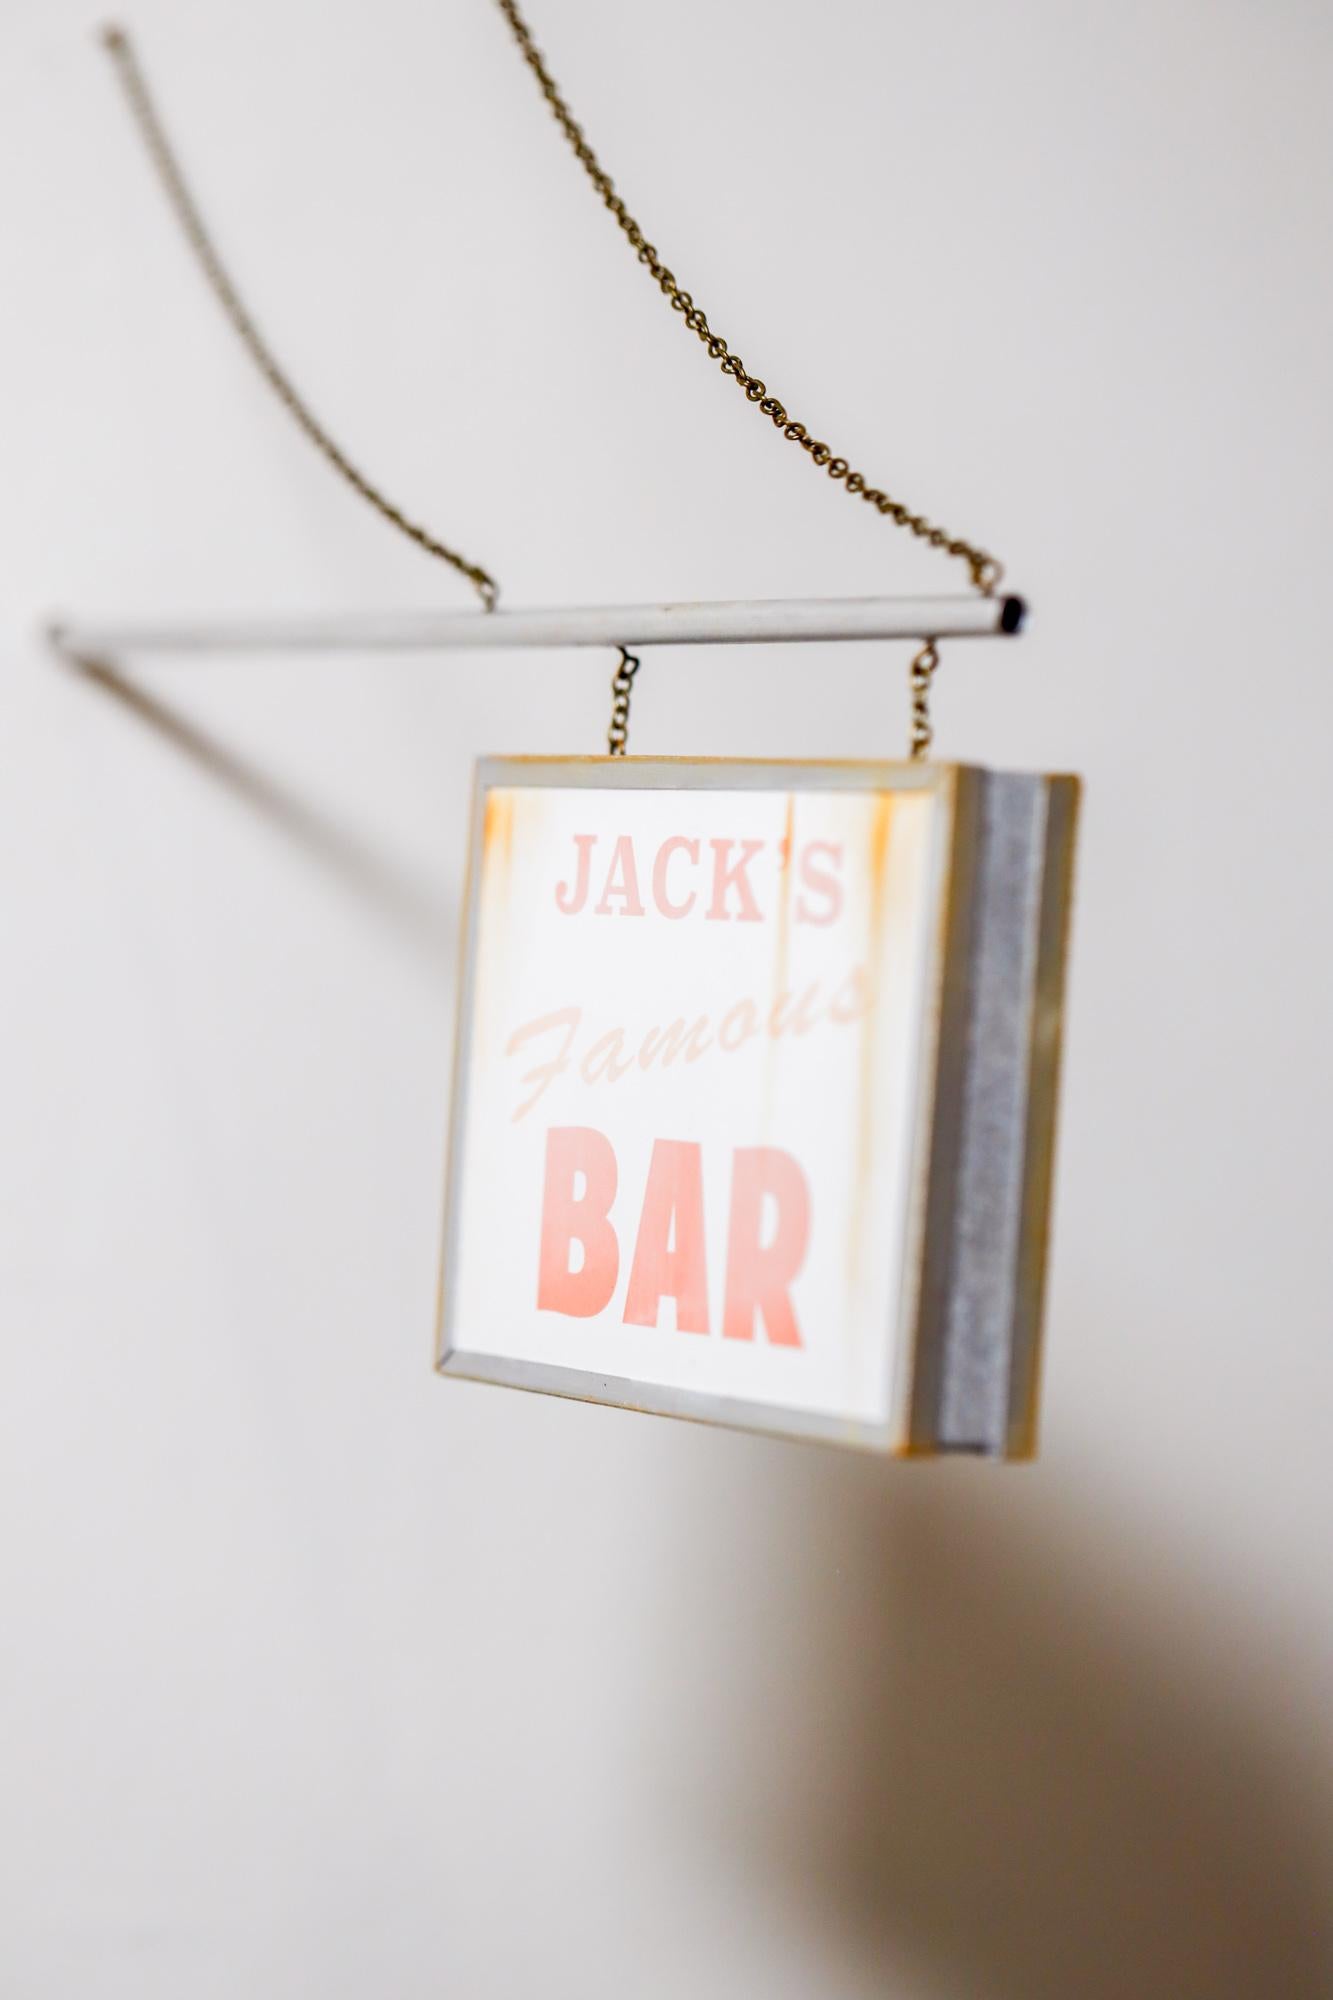 Jack's Famous Bar - Sculpture by Drew Leshko